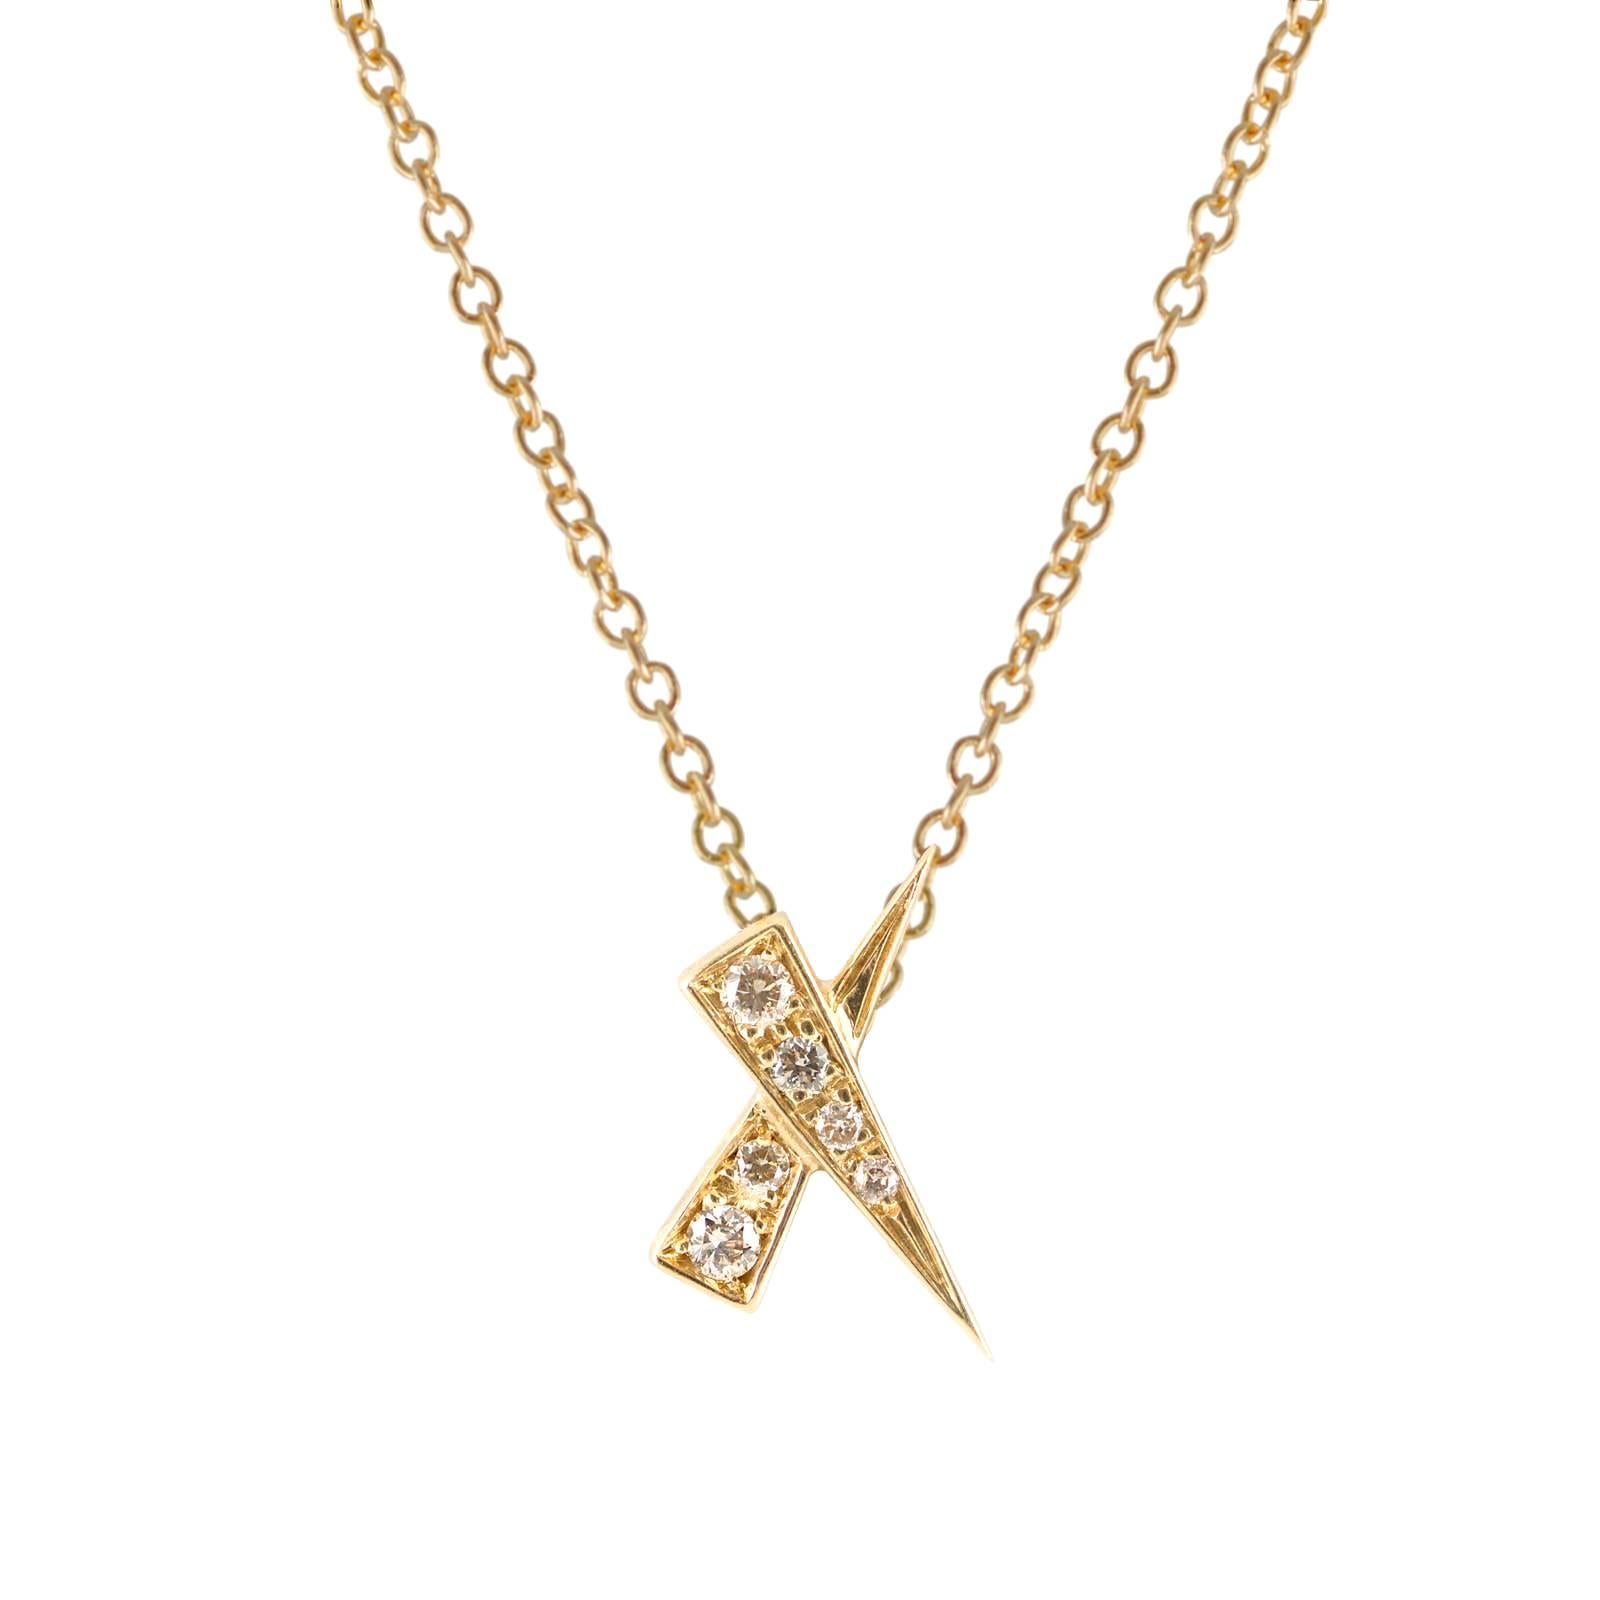 Daou Diamond Pave Kiss Gold Pendant Necklace, Romantic, Love. Modern Kiss Design